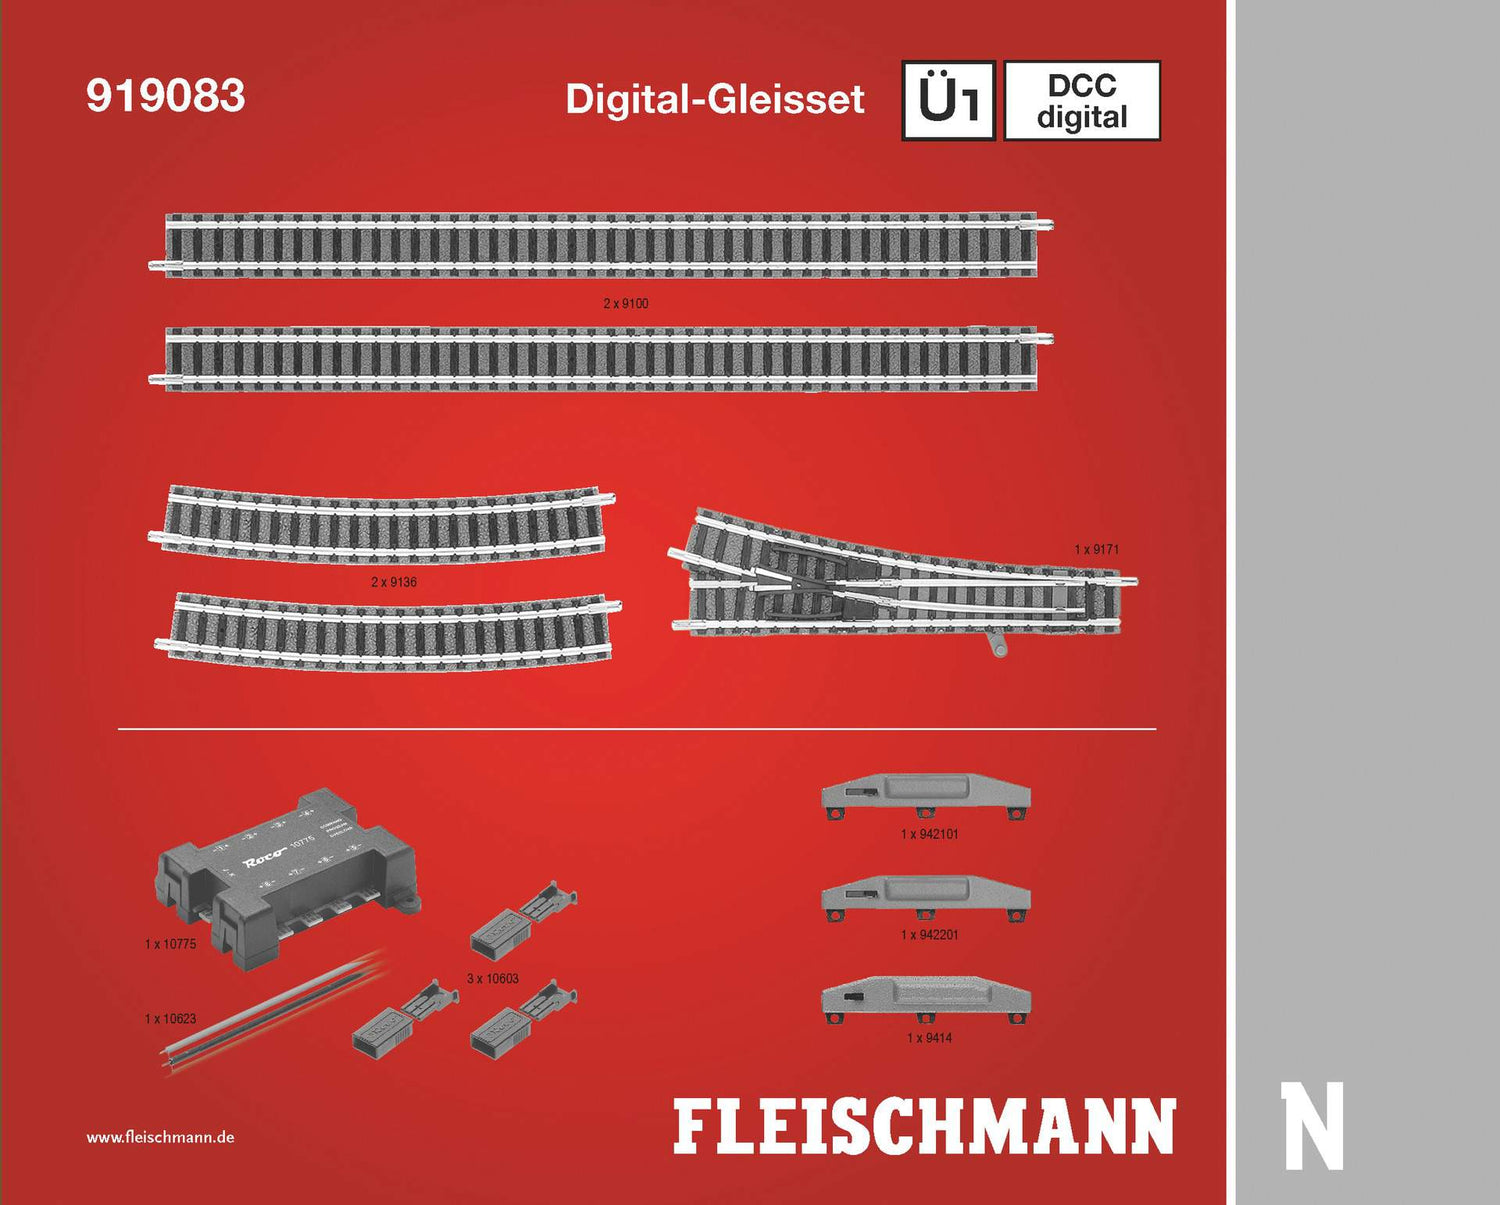 Fleischmann N 919083 DCC digital, Track Set Ü1